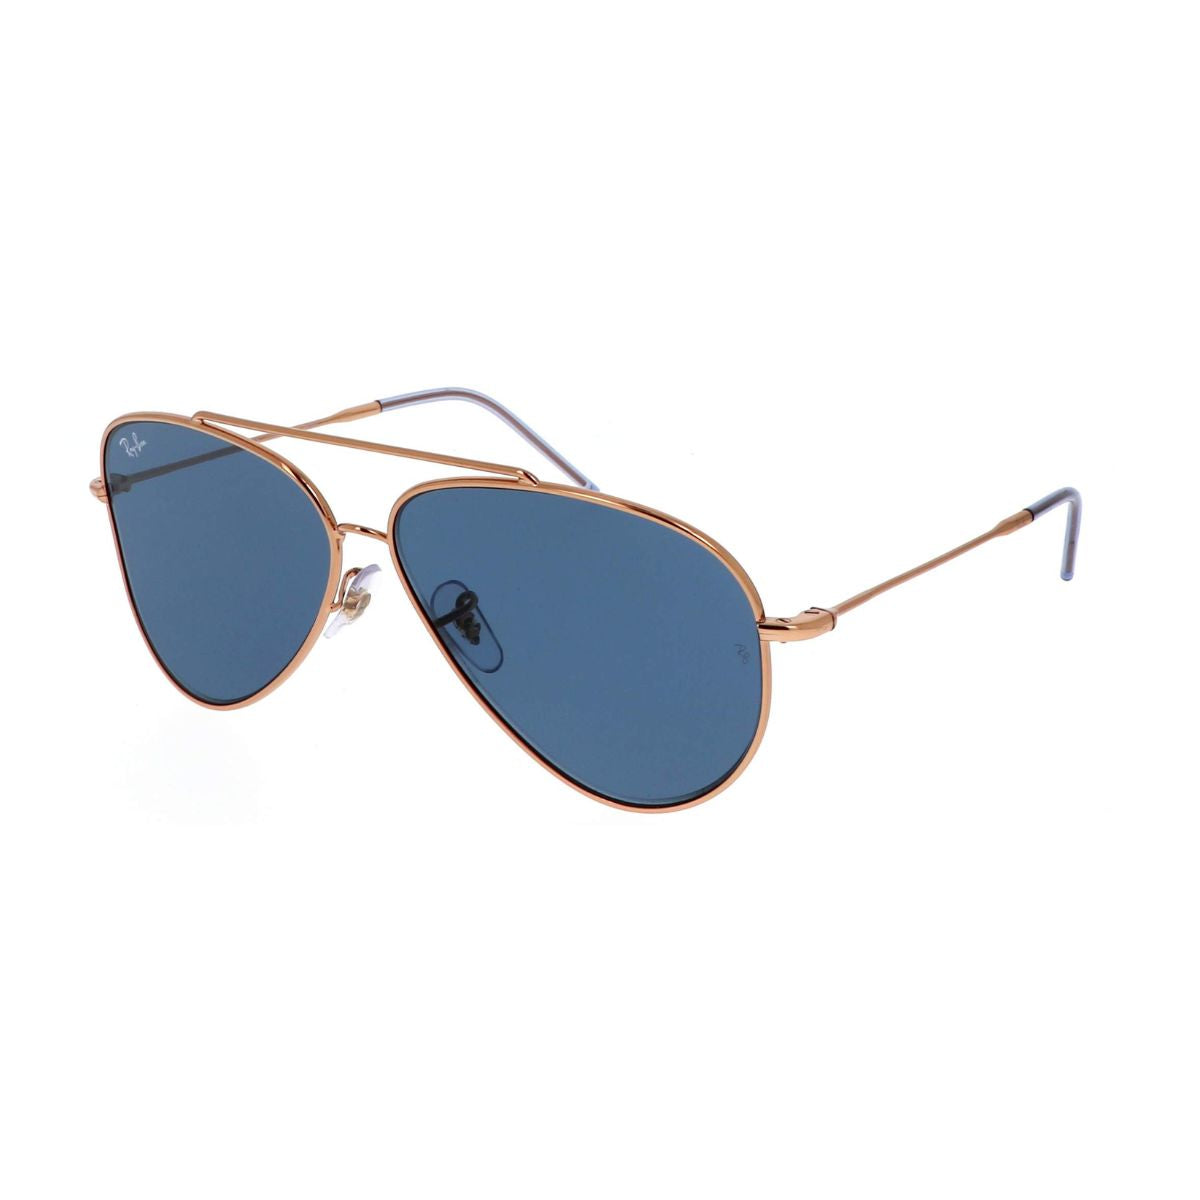 "Buy Rayban 0101 9202/3a Reverce Aviator UV Sunglasses For Men's At Optorium"